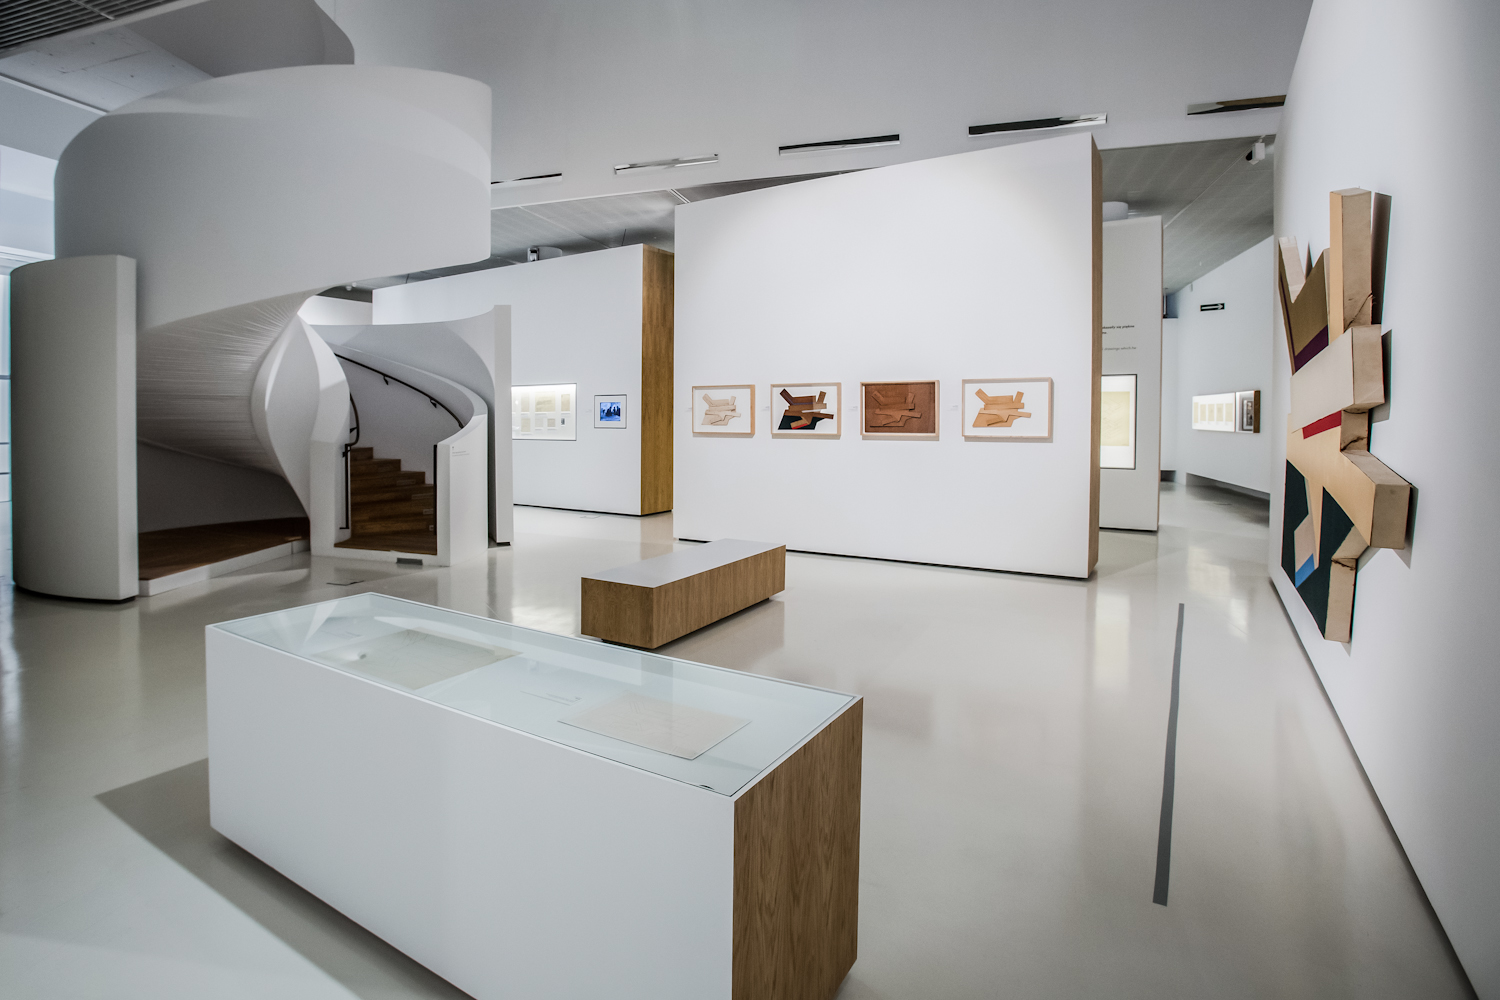 Frank Stella i synagogi dawnej Polski, widok wystawy